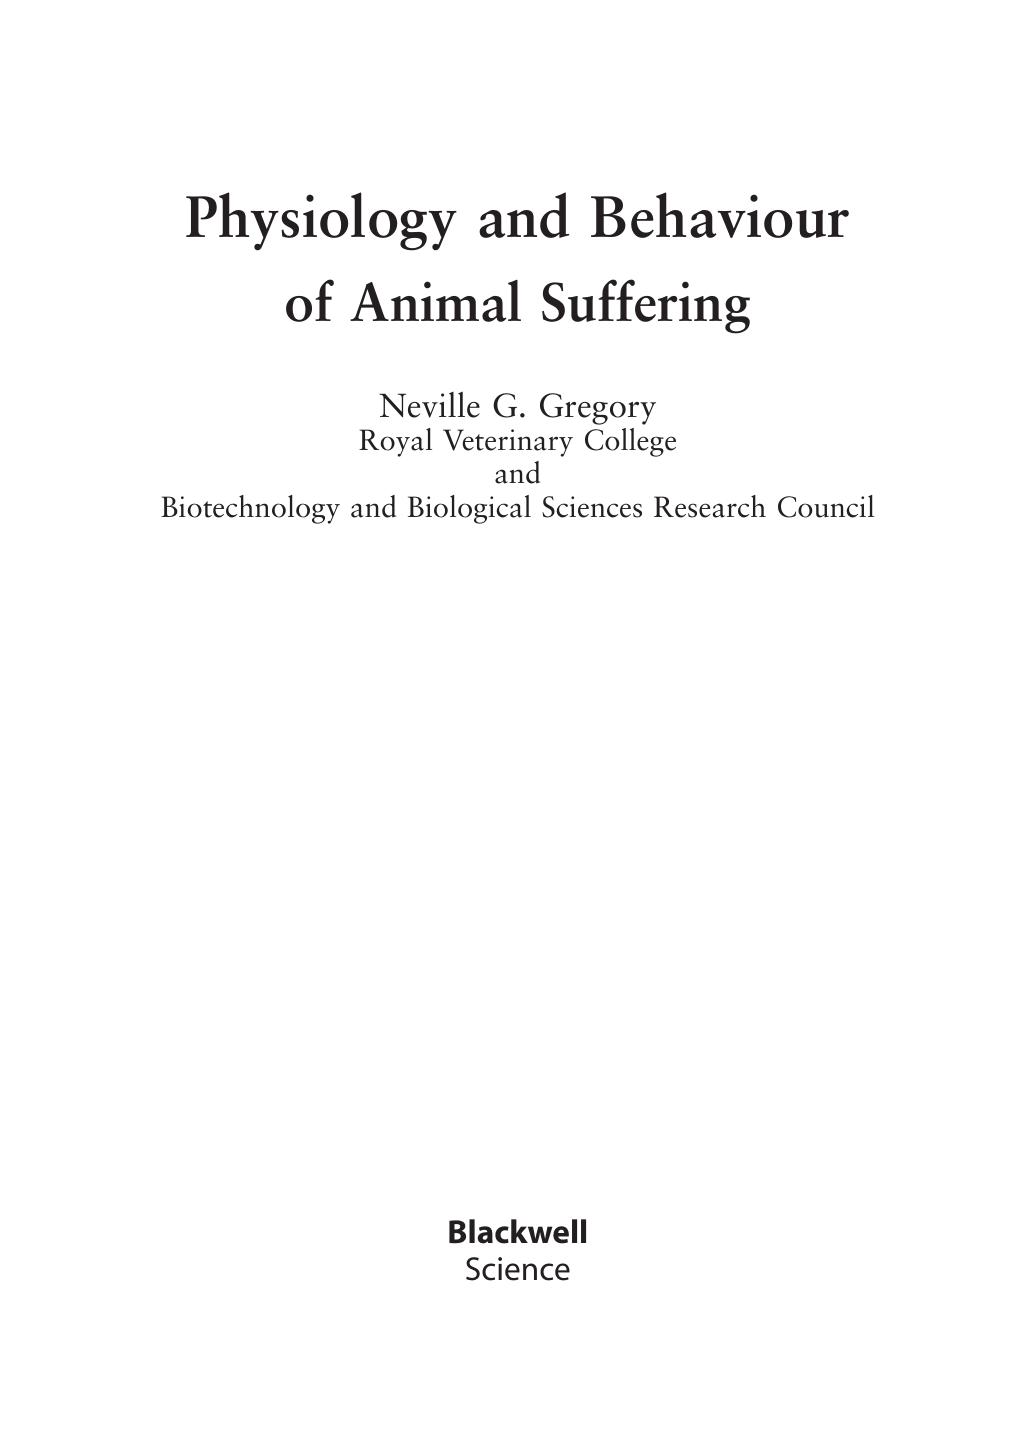 Physiology and Behaviour of Animal Suffering (UFAW Animal Welfare) 1957